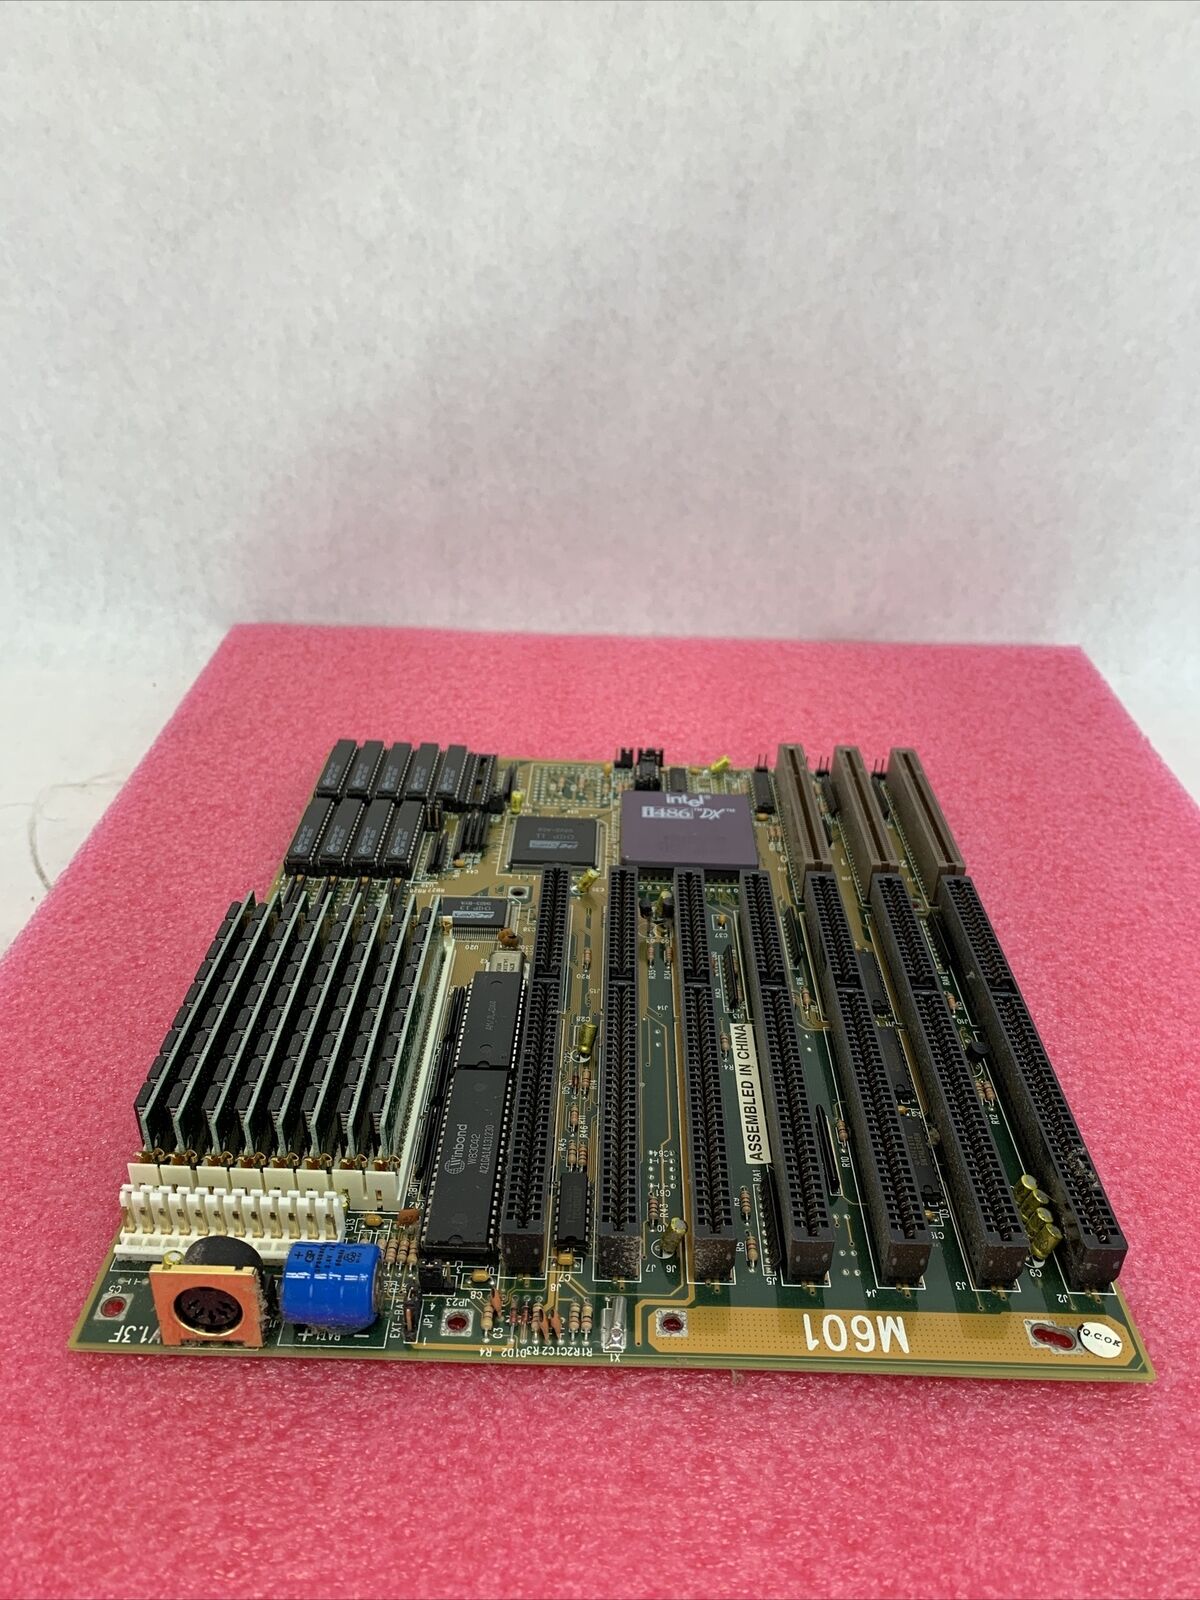 PC Chips M601 v1.3F Motherboard Intel 80486DX 33MHz 8MB RAM